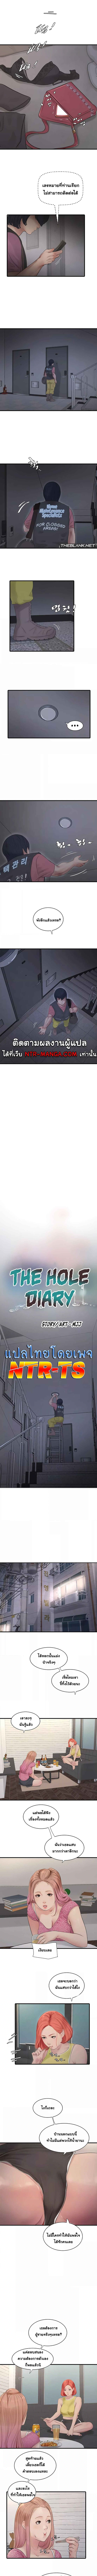 The Hole Diary 23 (1)